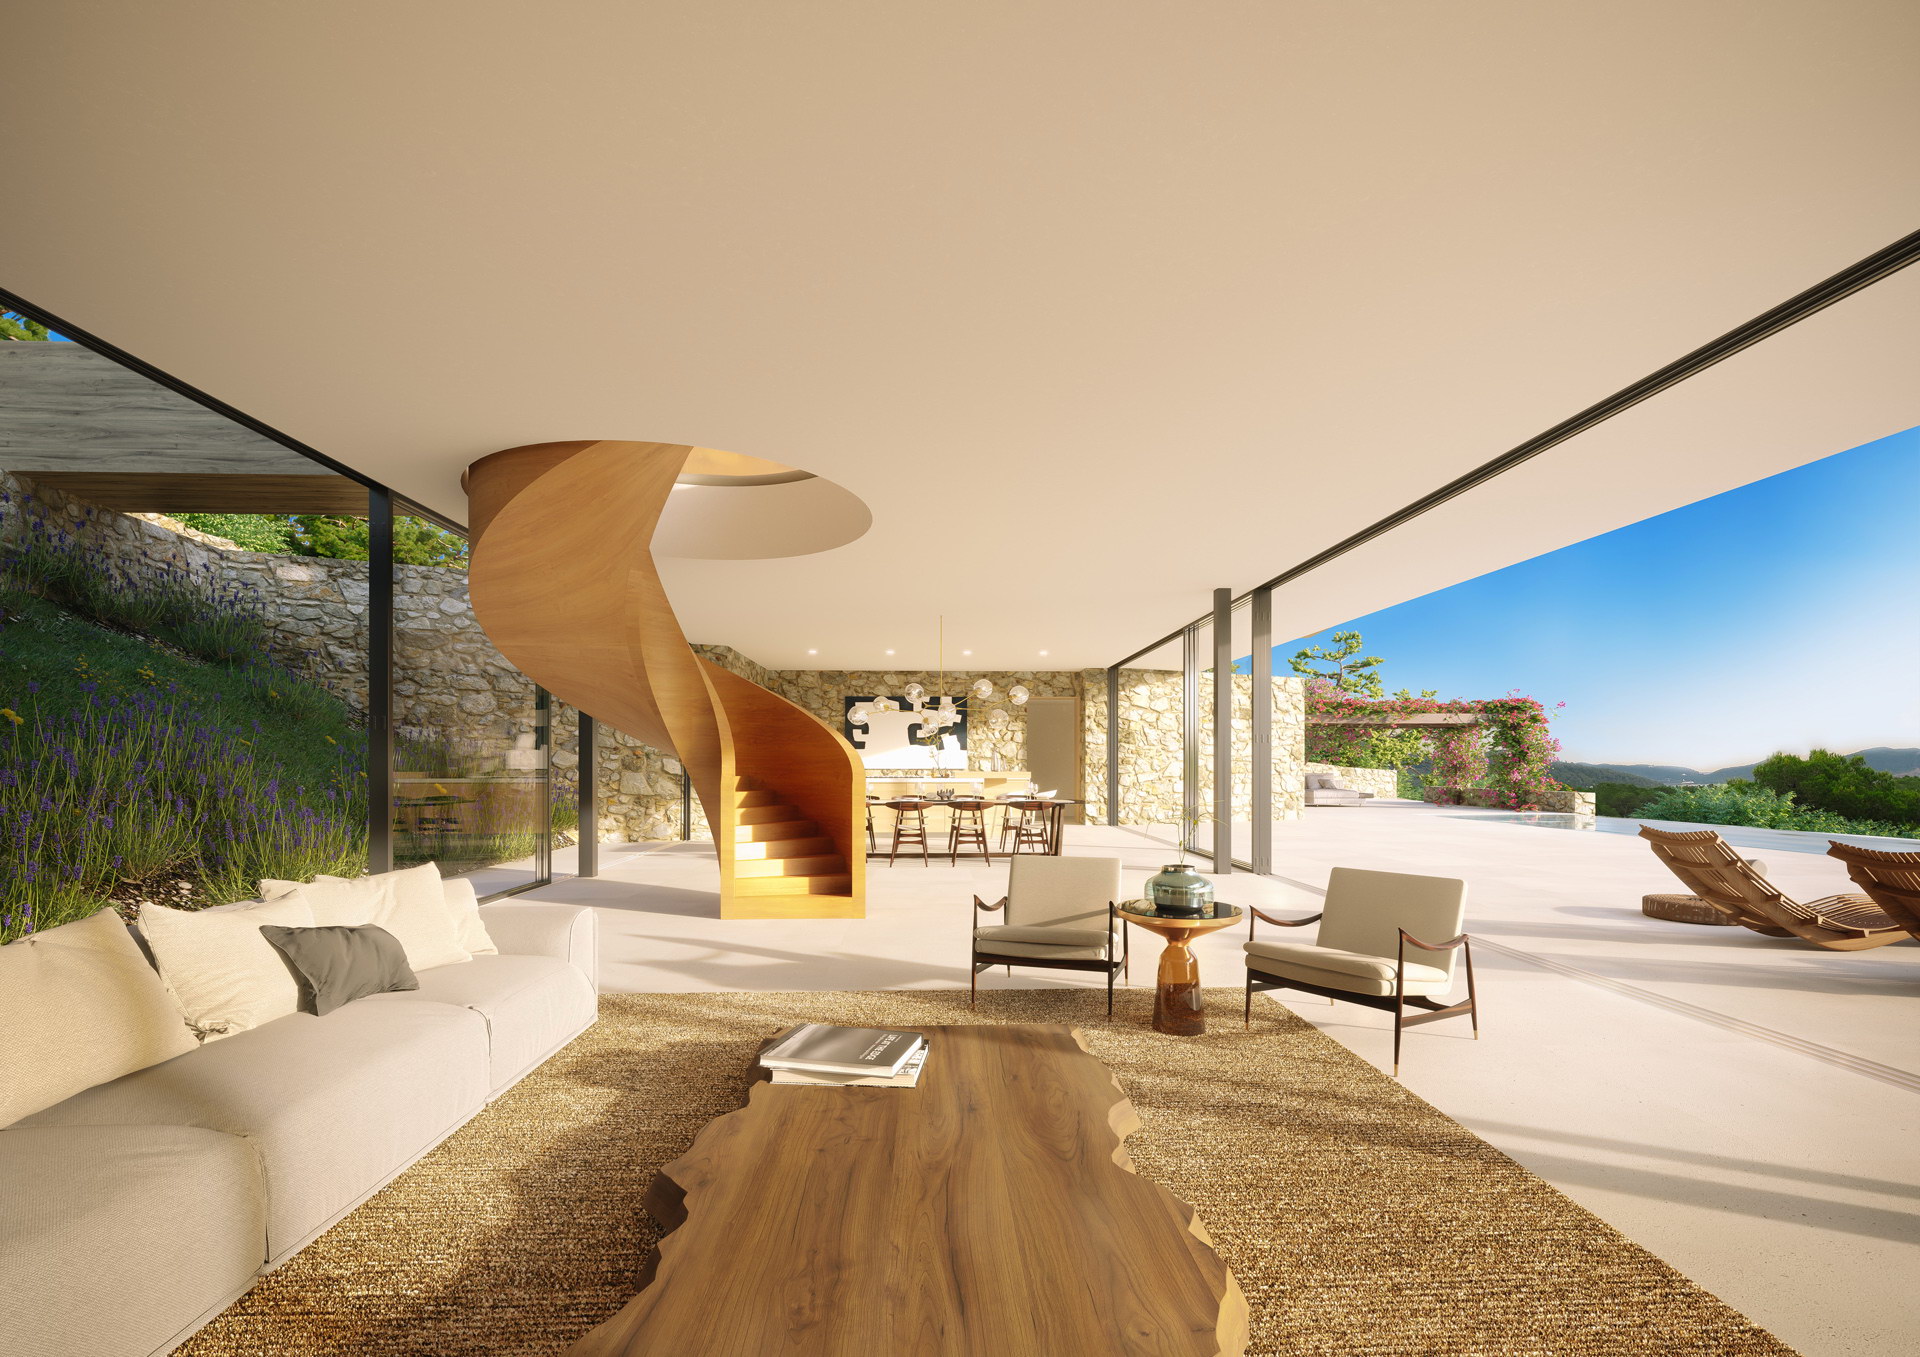 Residential Villa in Ibiza by Render Art